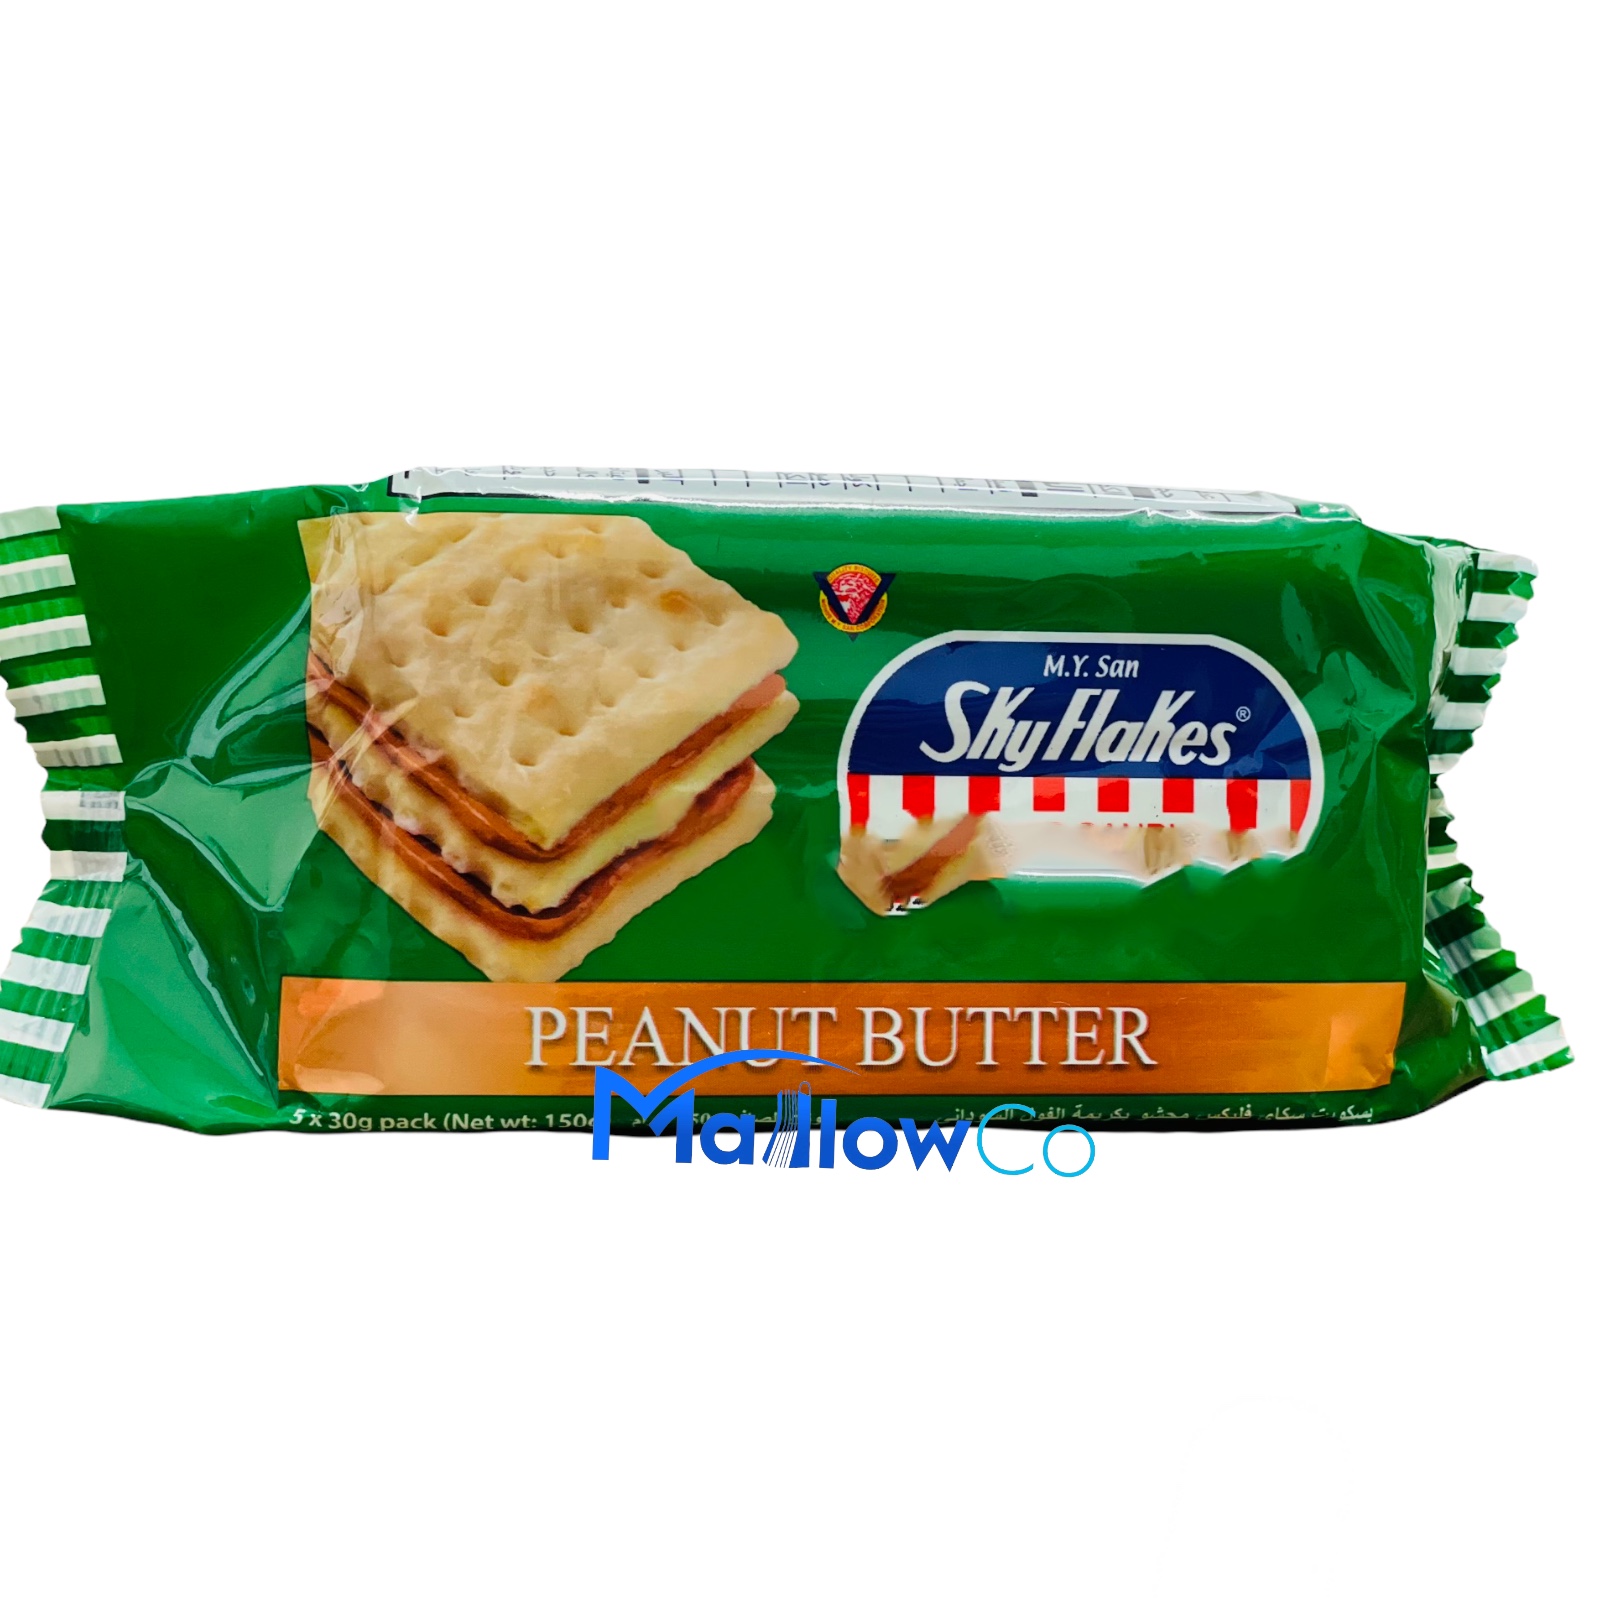 M.Y Sky Flakes Peanut Butter Cracker